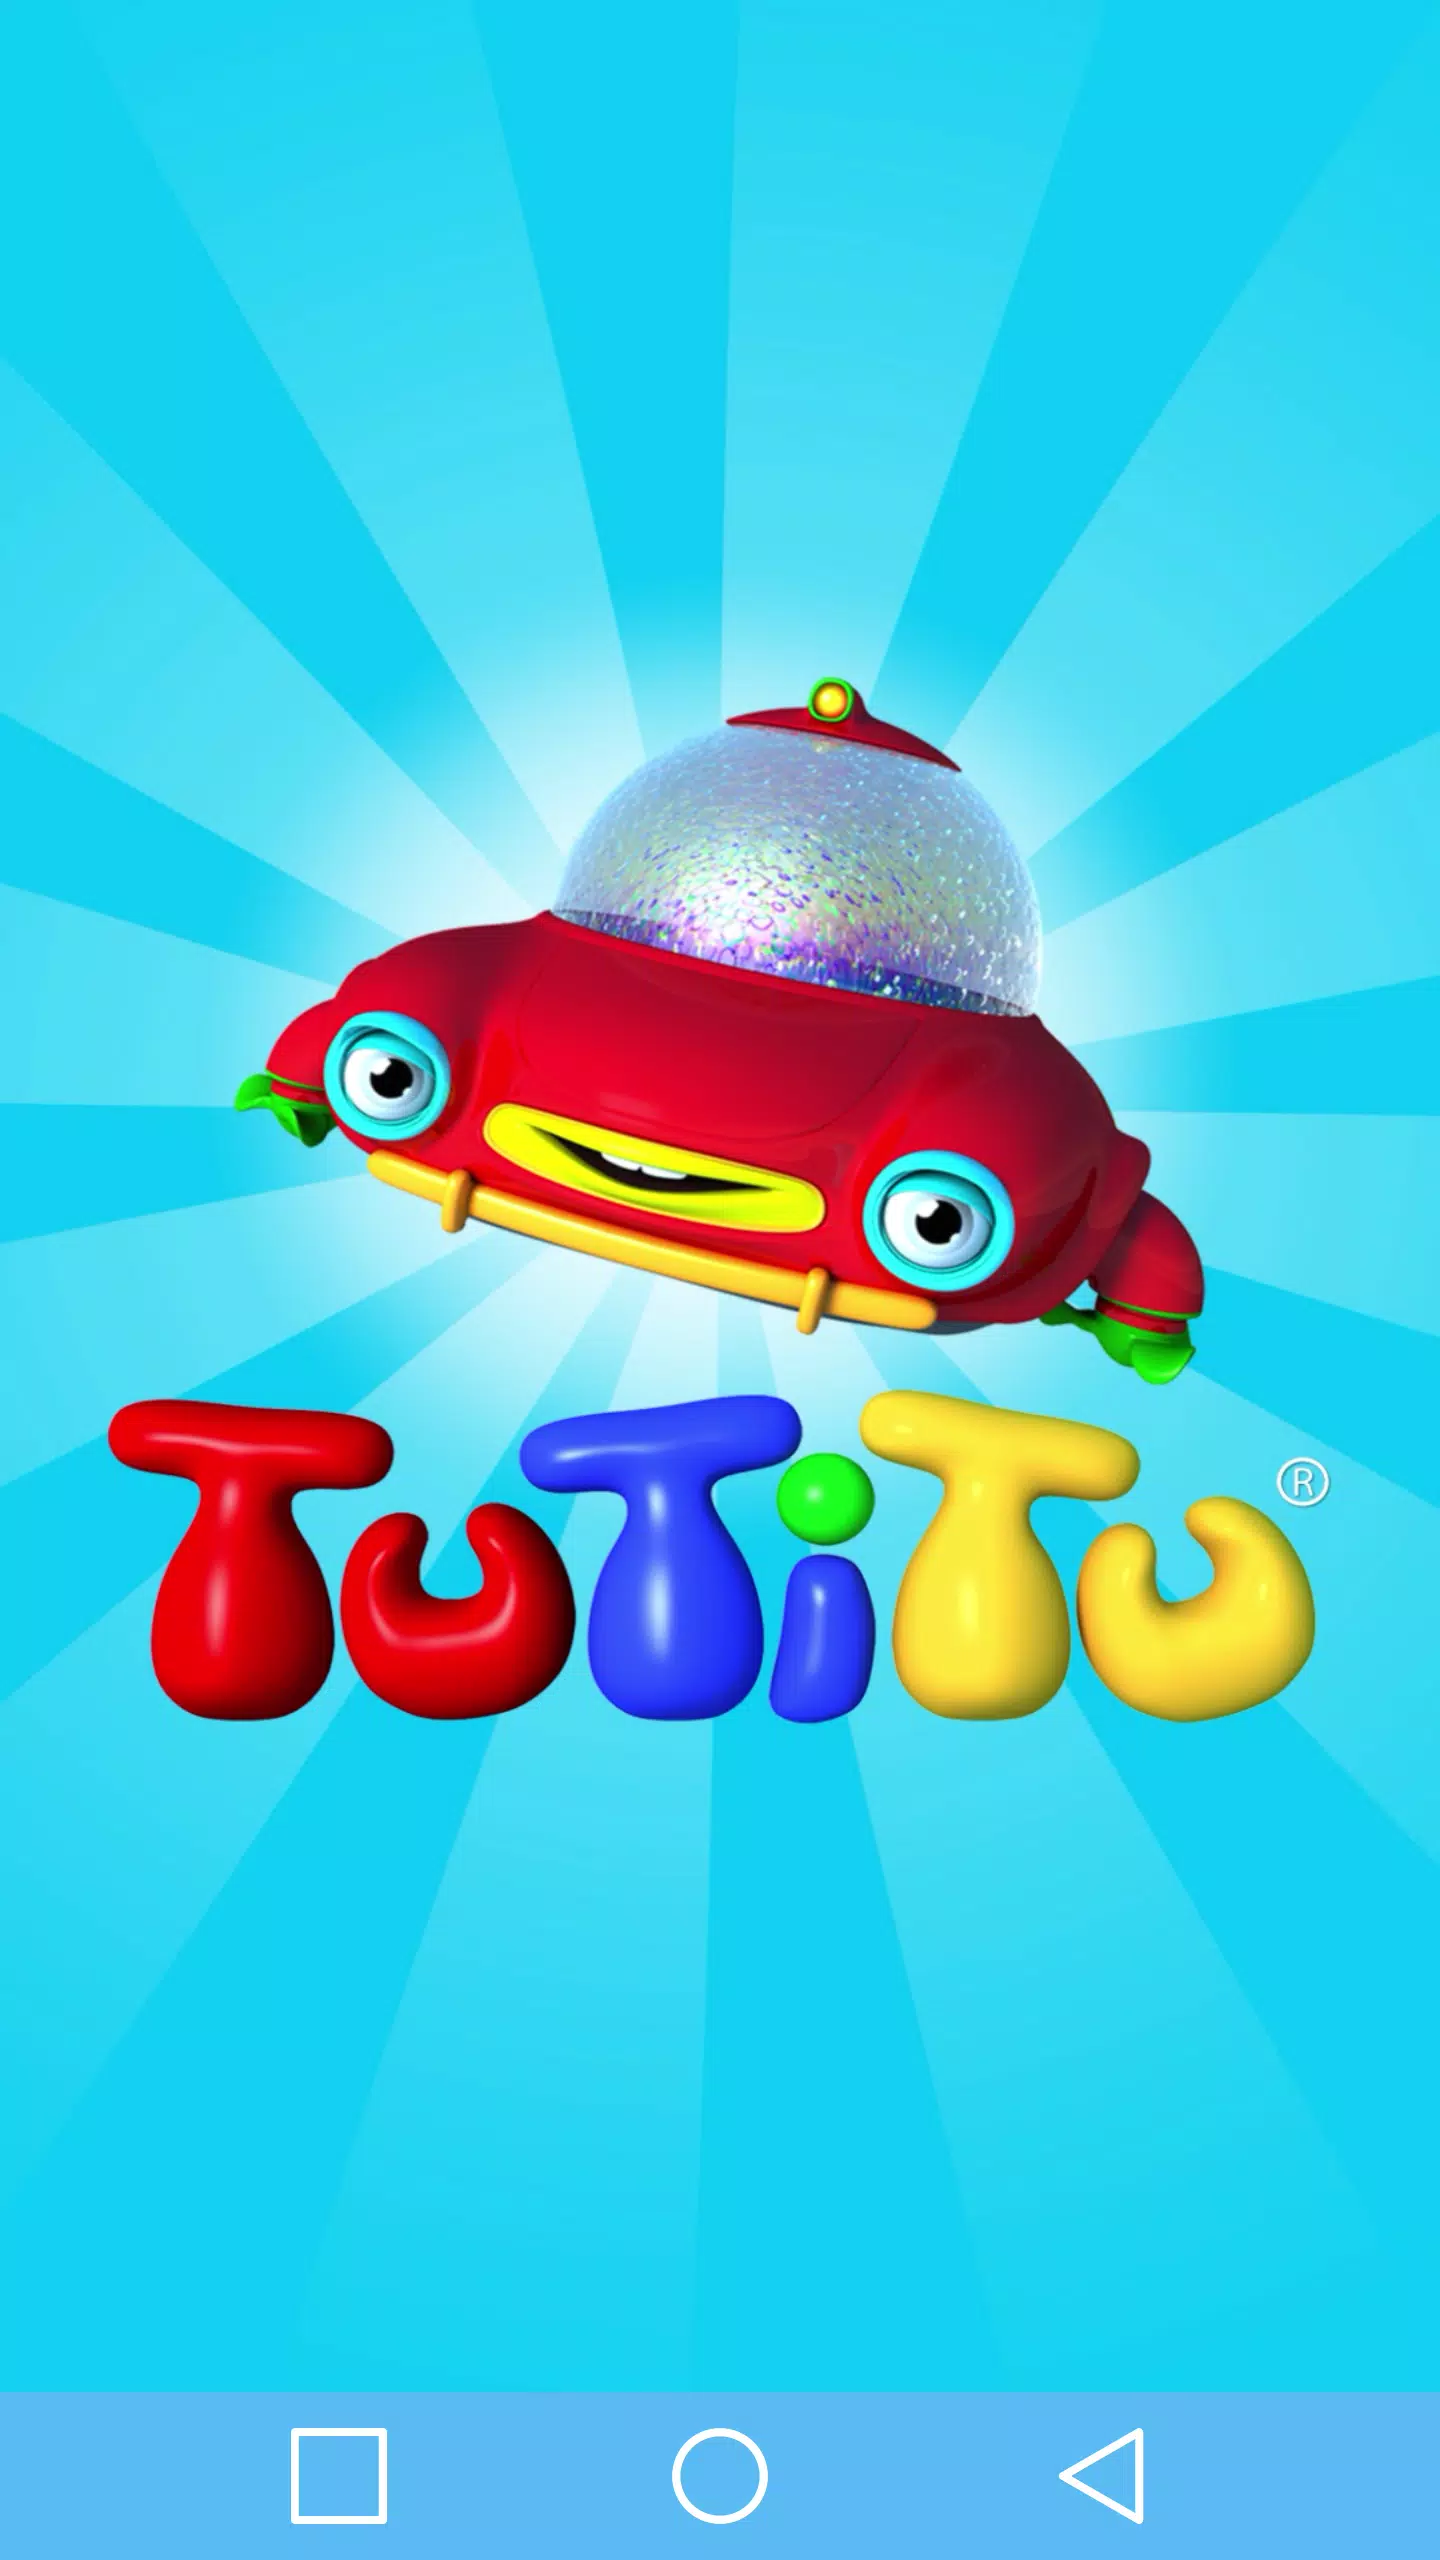 TuTiTu Video APK for Android Download